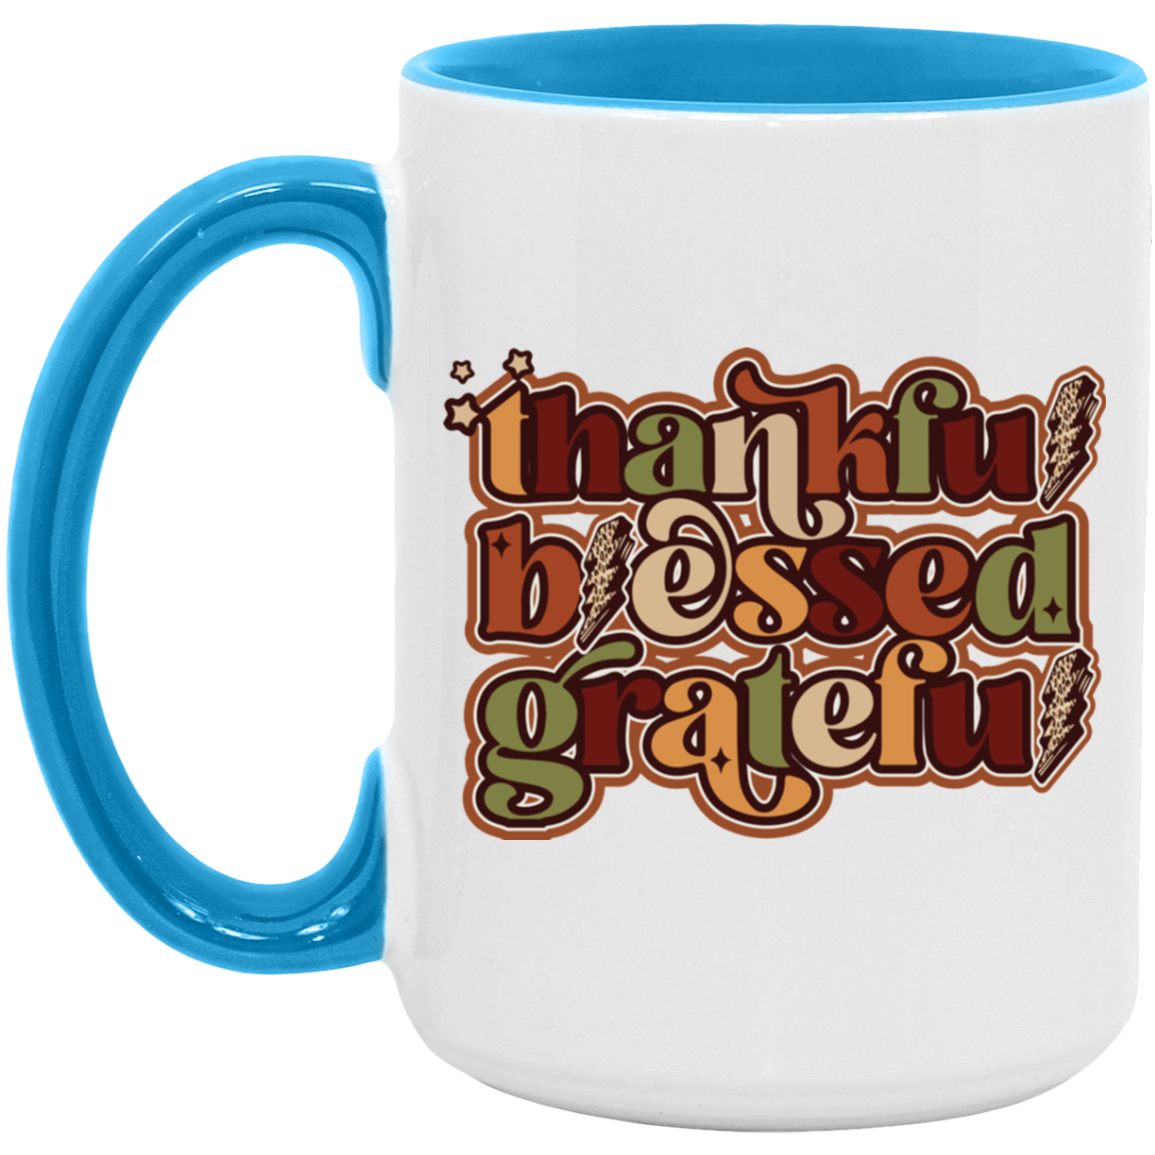 Thankful, Blessed, Grateful Mug